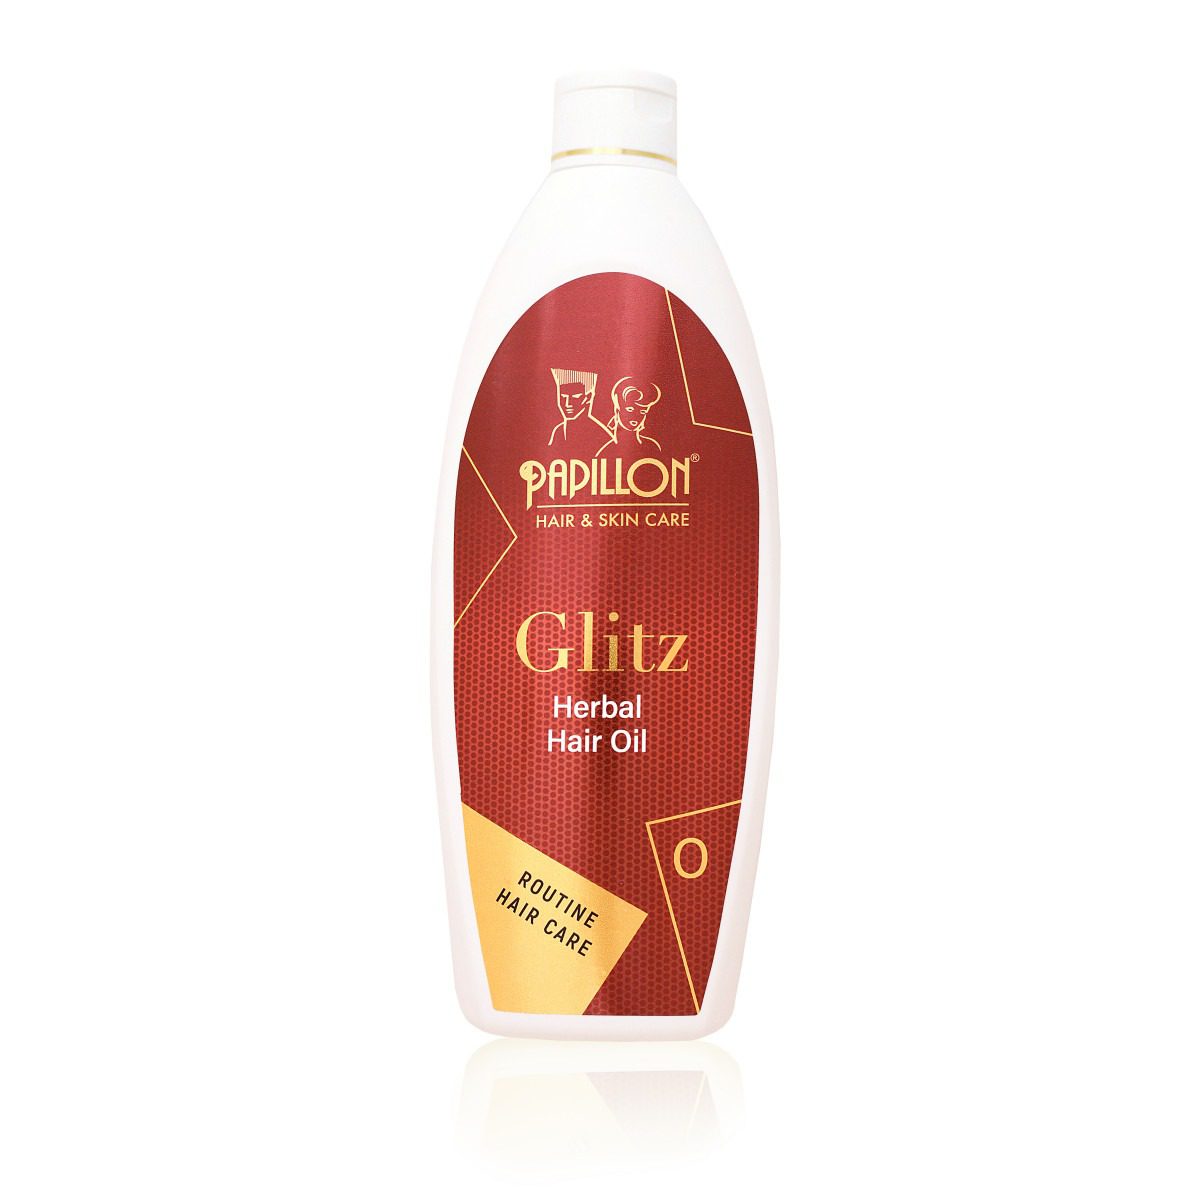 Glitz Herbal Hair Oil - Large